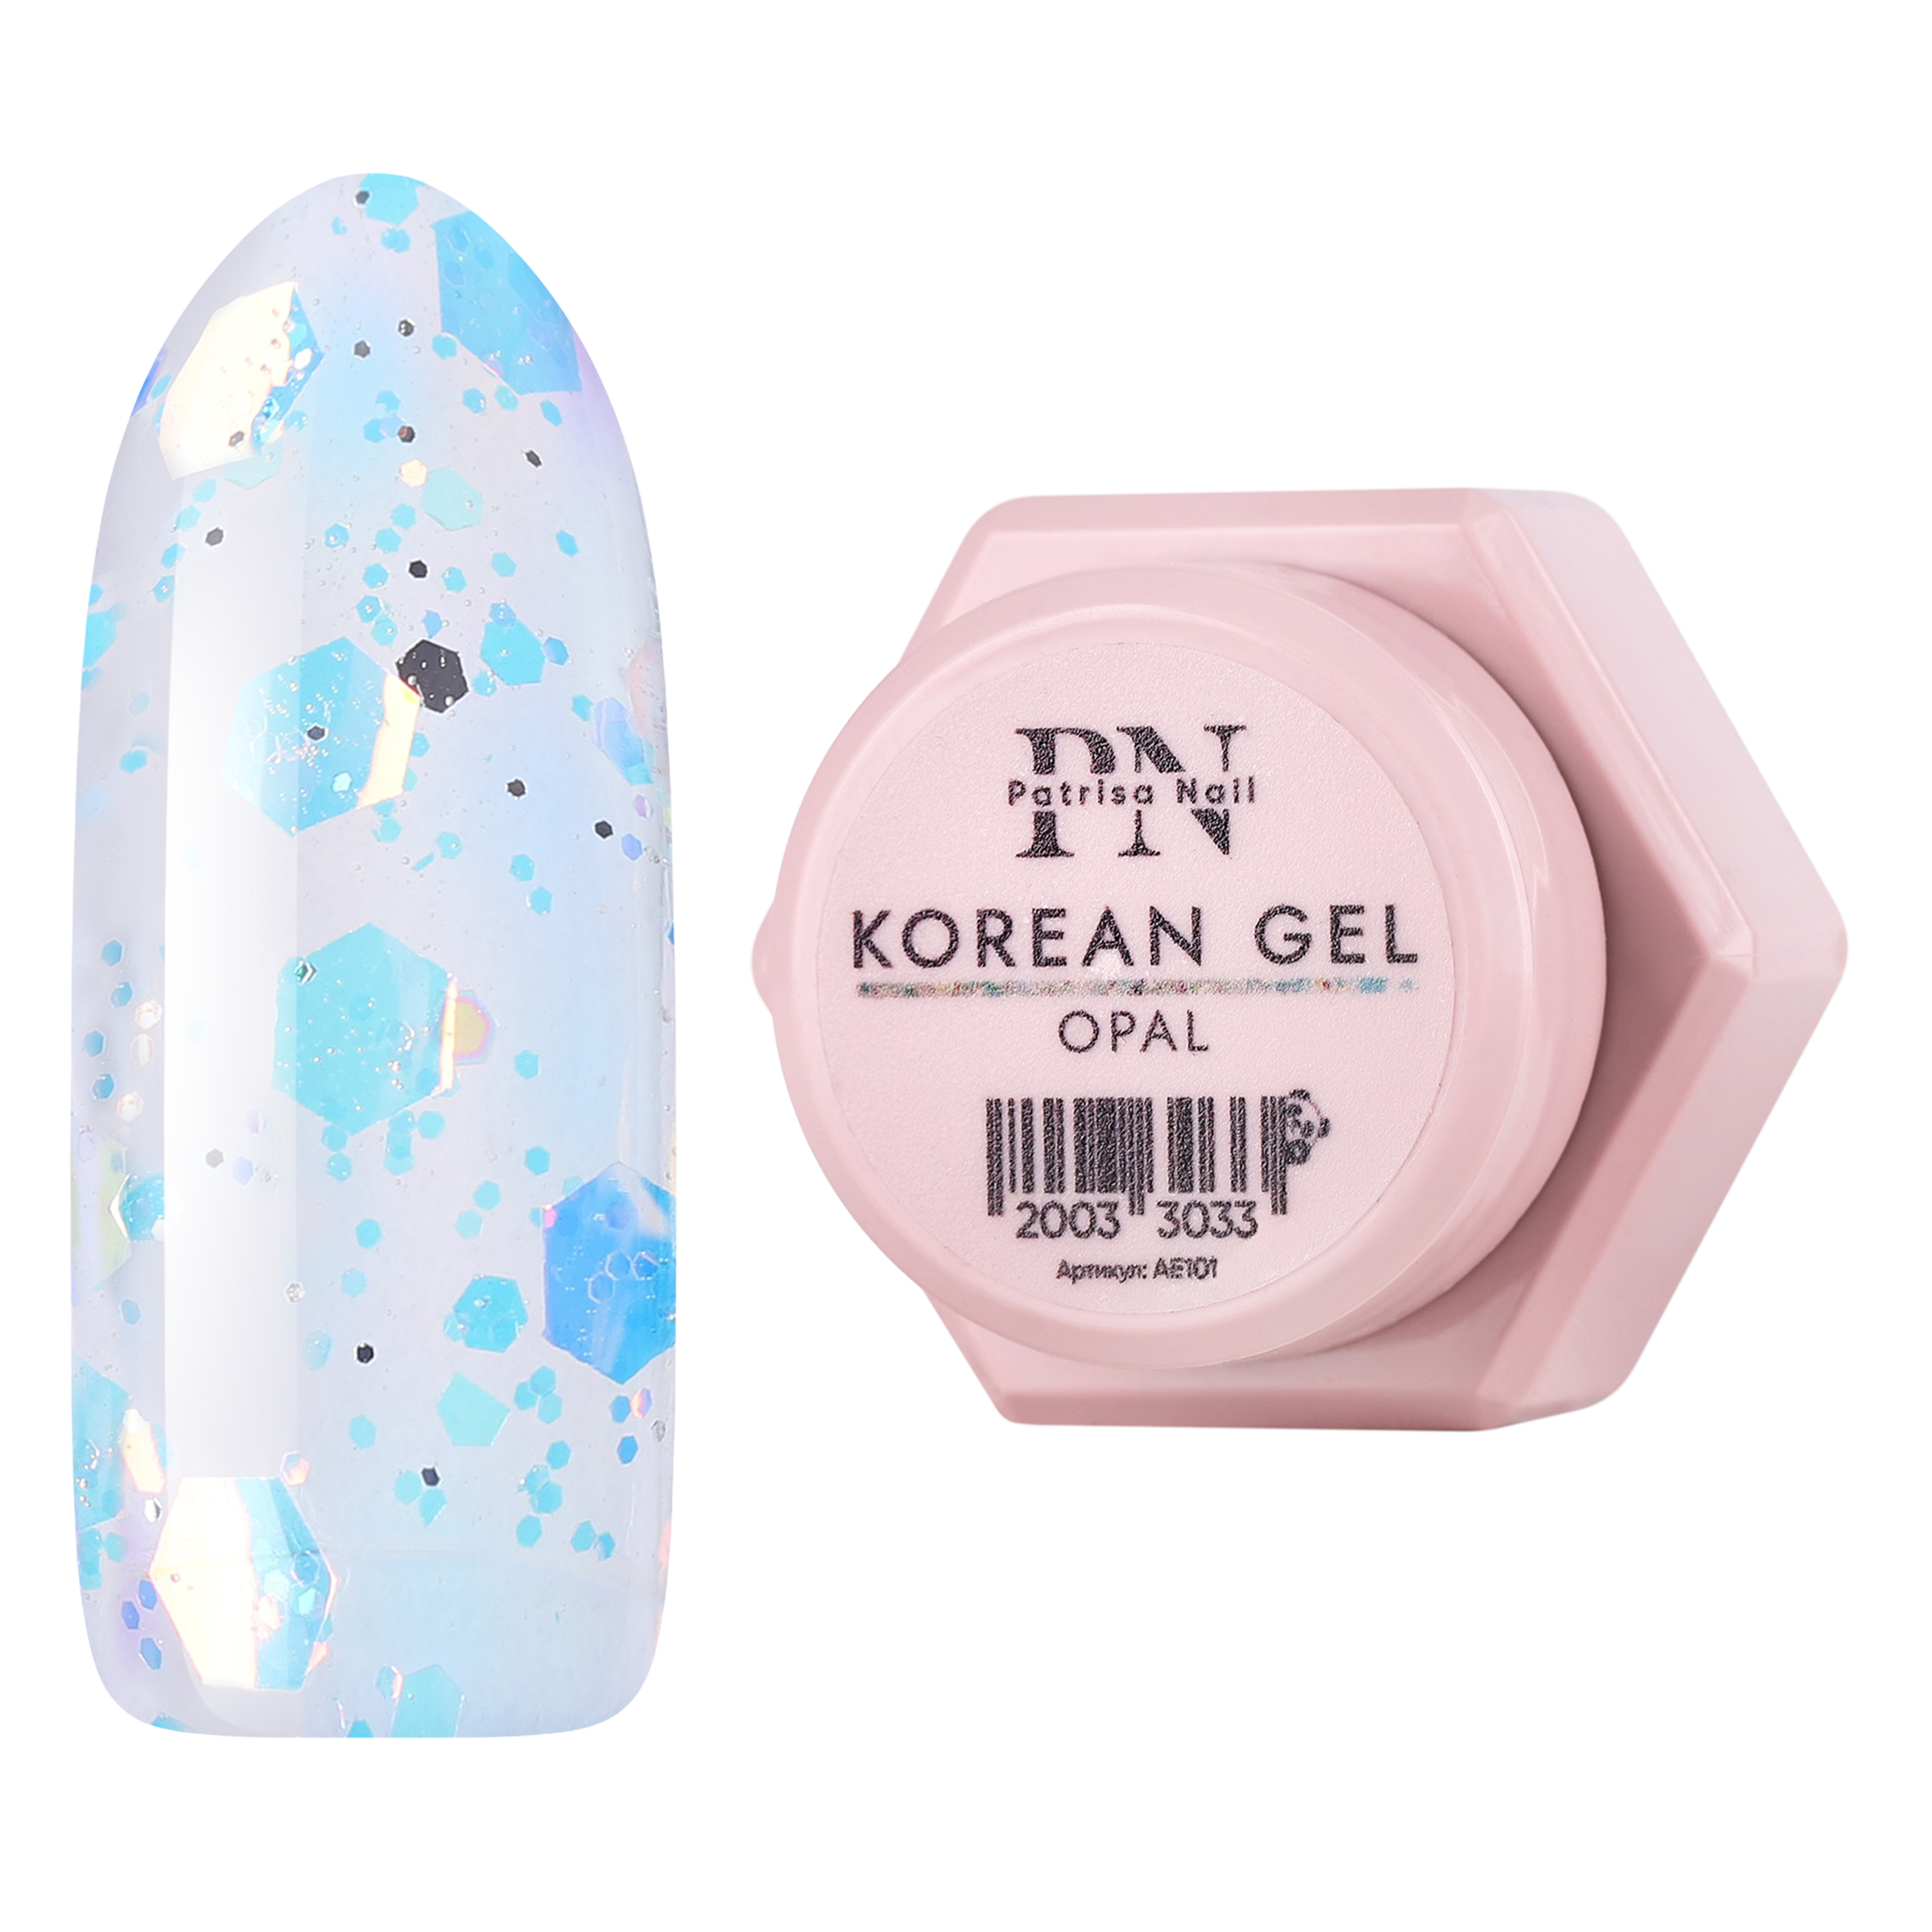 Гель для дизайна ногтей Patrisa Nail KOREAN GEL Opal камифубуки, 5 г global fashion гель лак opal 01